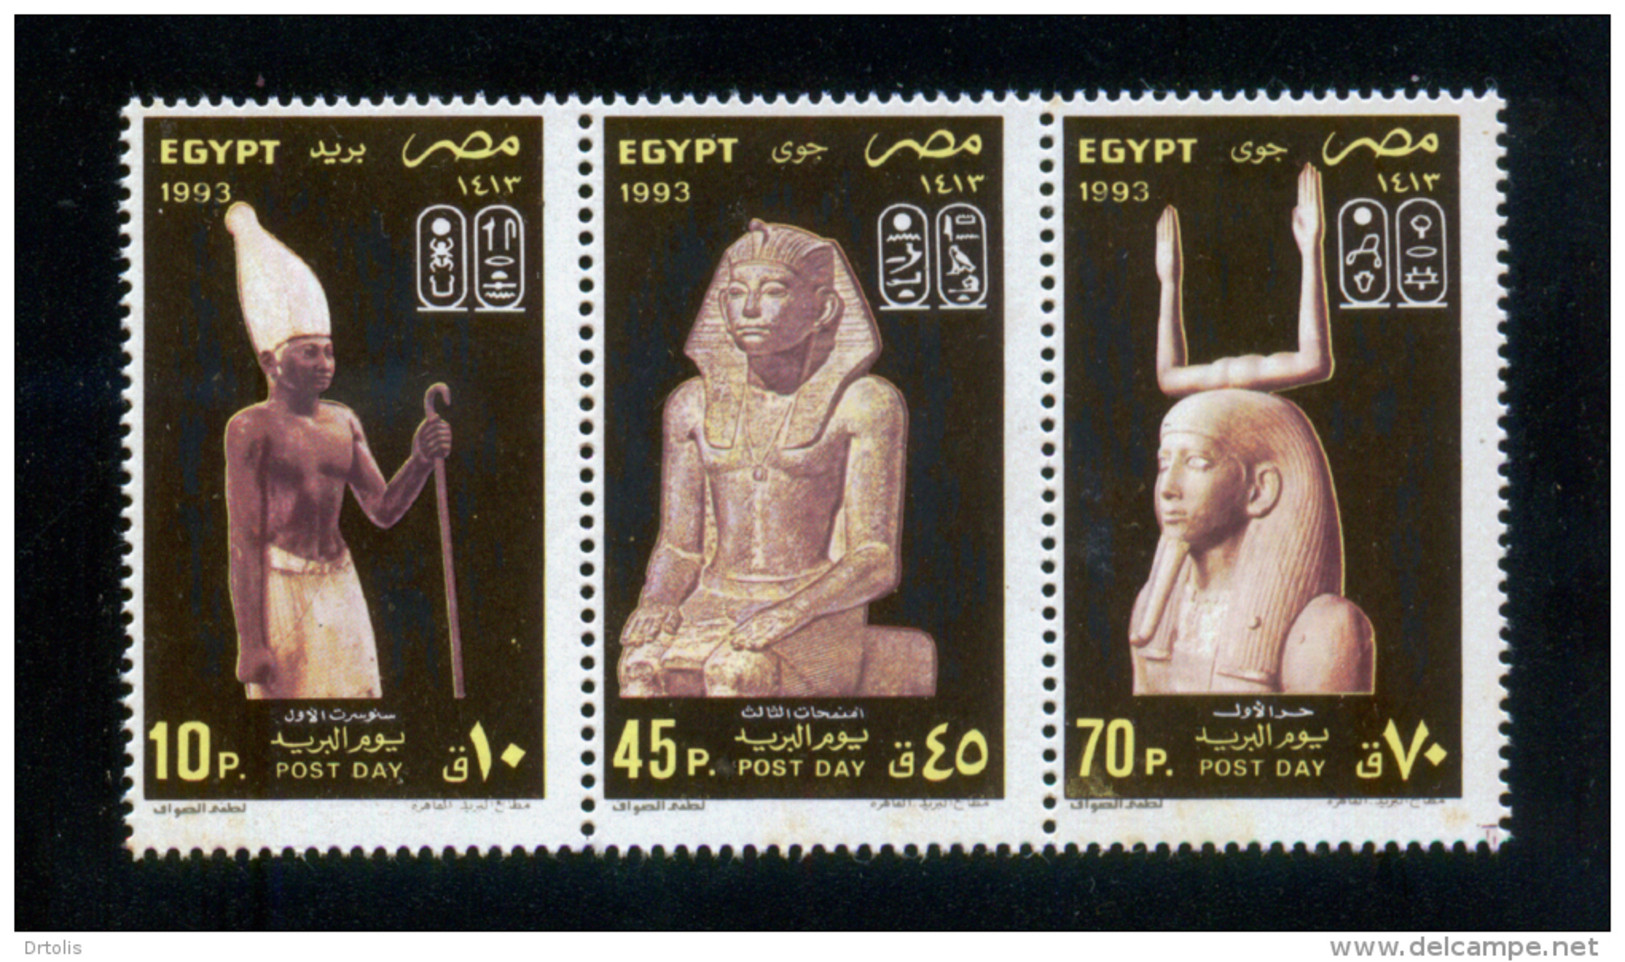 EGYPT / 1993 / POST DAY / SESOSTRIS I / AMENEMHET III / HUR I / MNH / VF - Nuevos